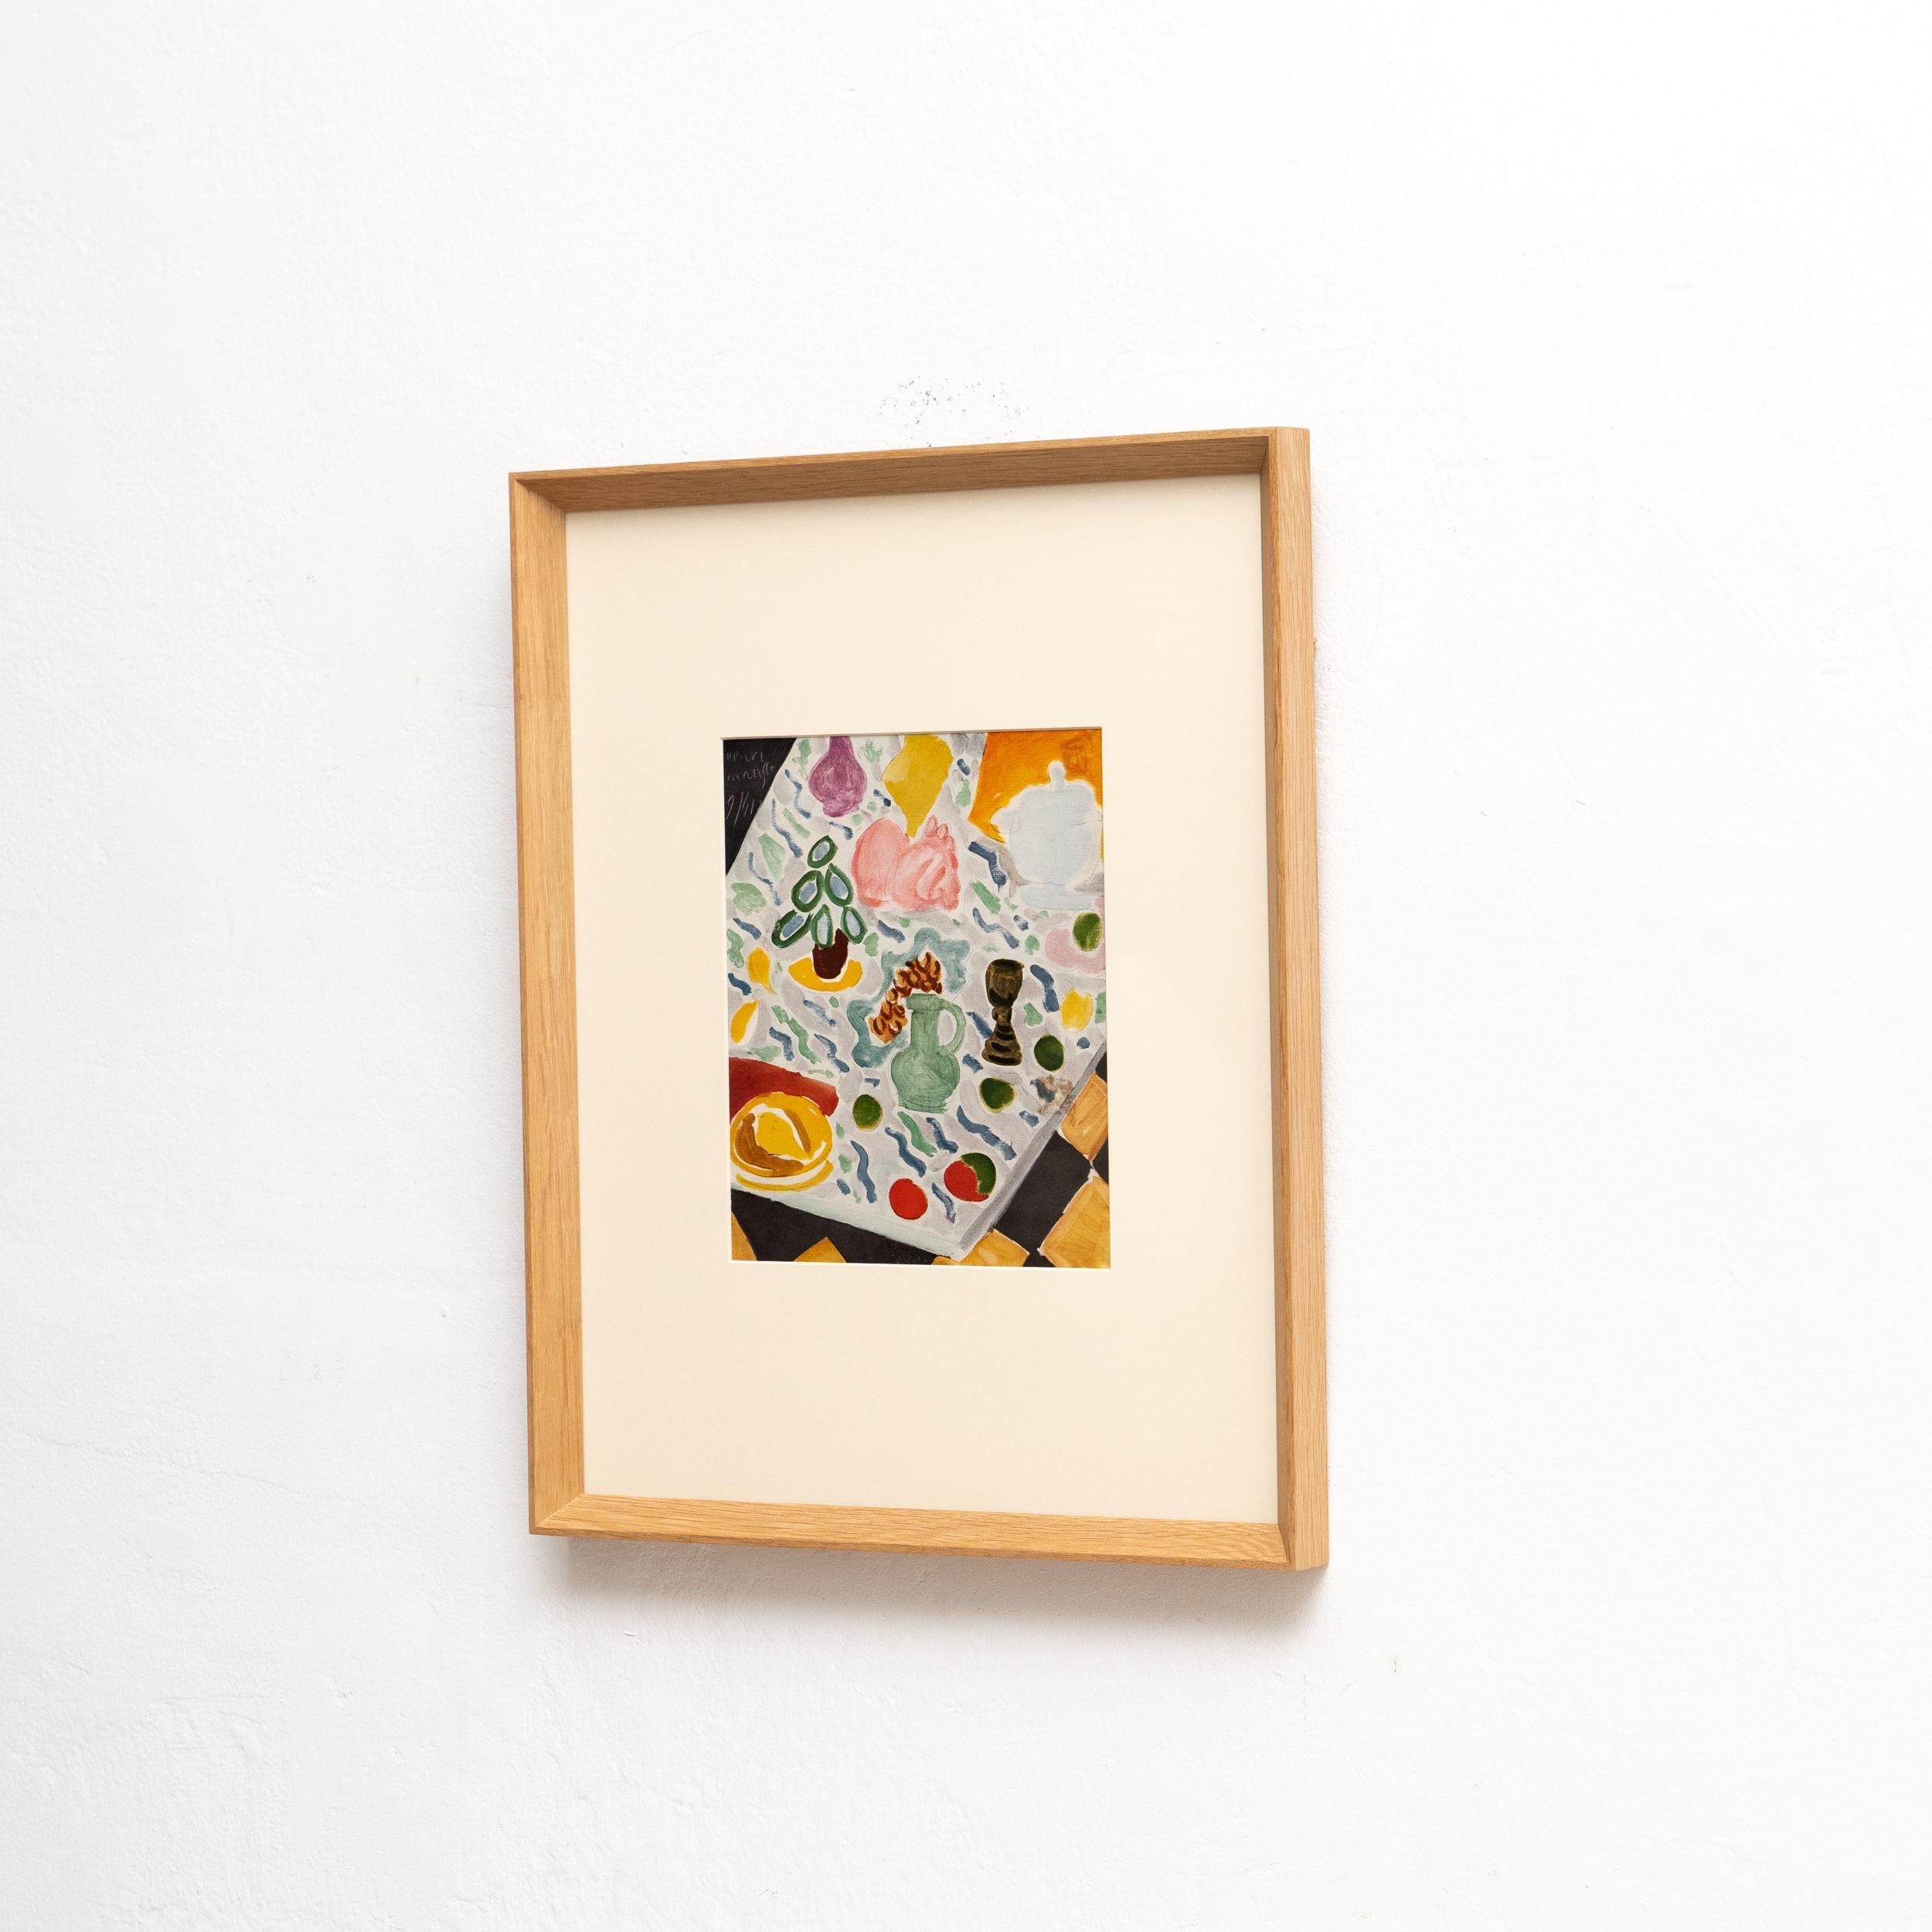 French Rare Color Lithograph: A Glimpse into Matisse's Artistic Mastery For Sale